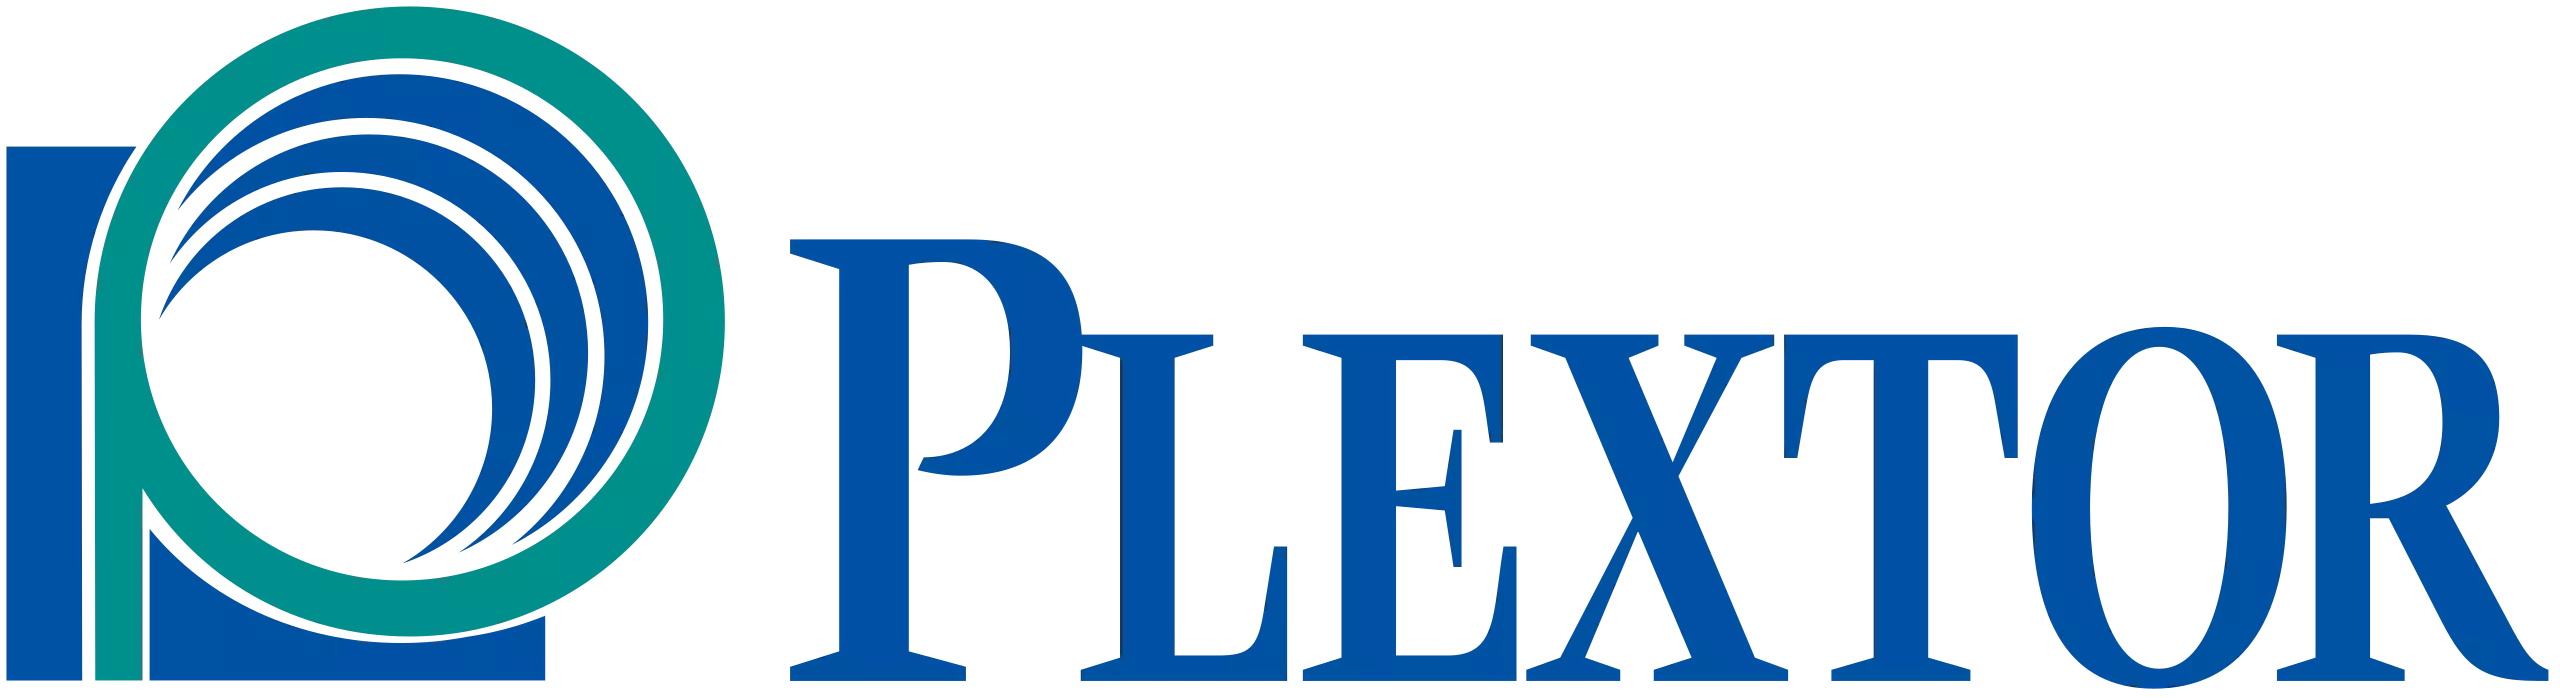 Plextor Logo